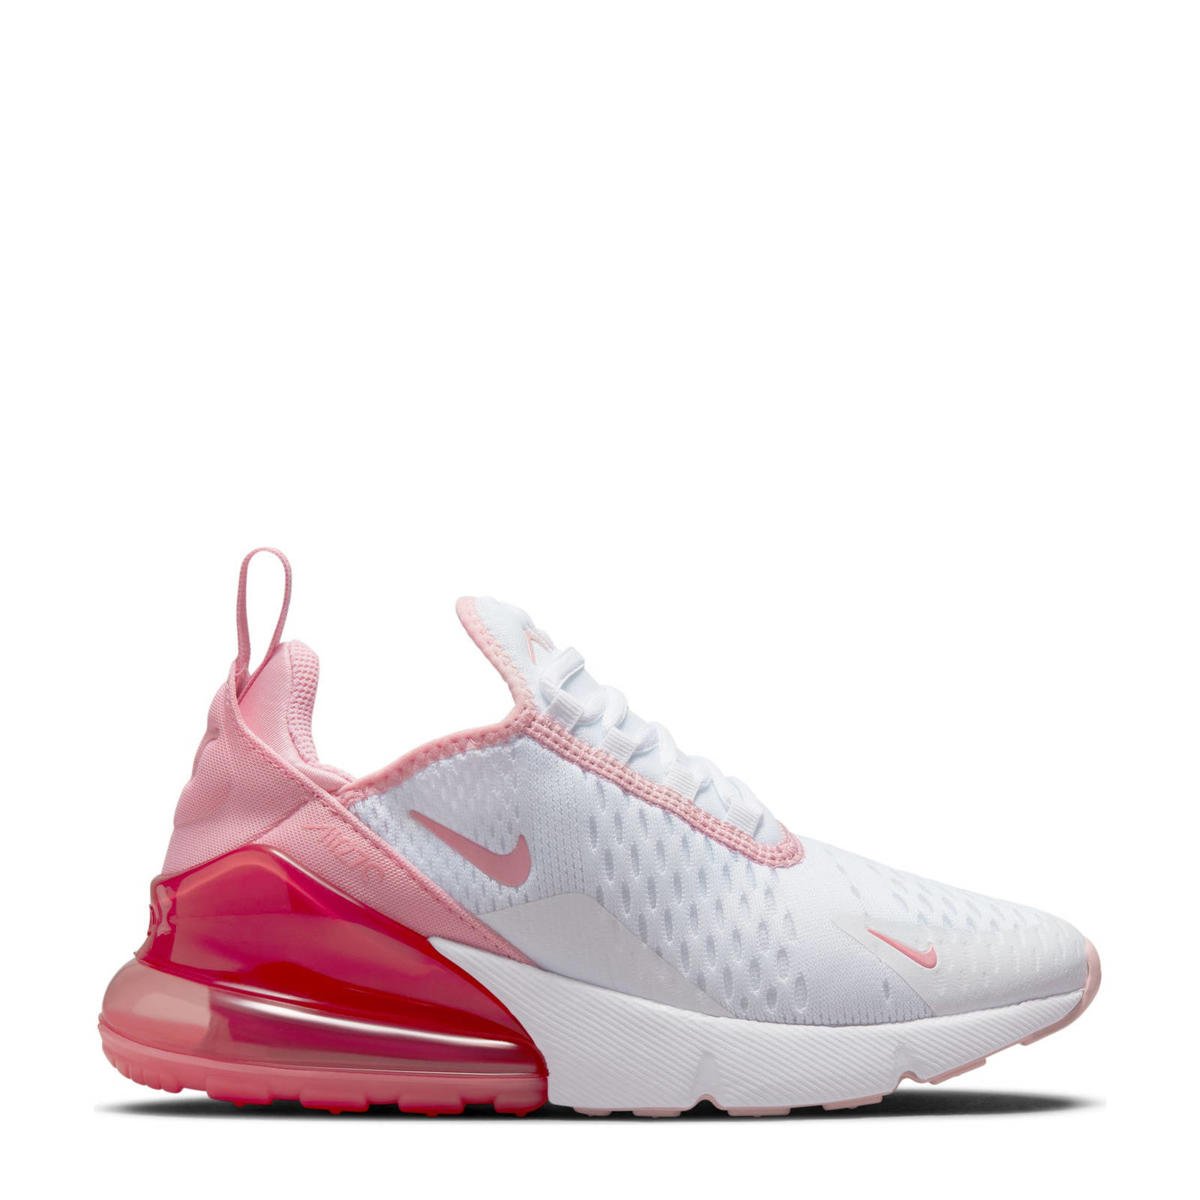 Datum vleet bescherming Nike Air Max 270 sneakers wit/roze | wehkamp